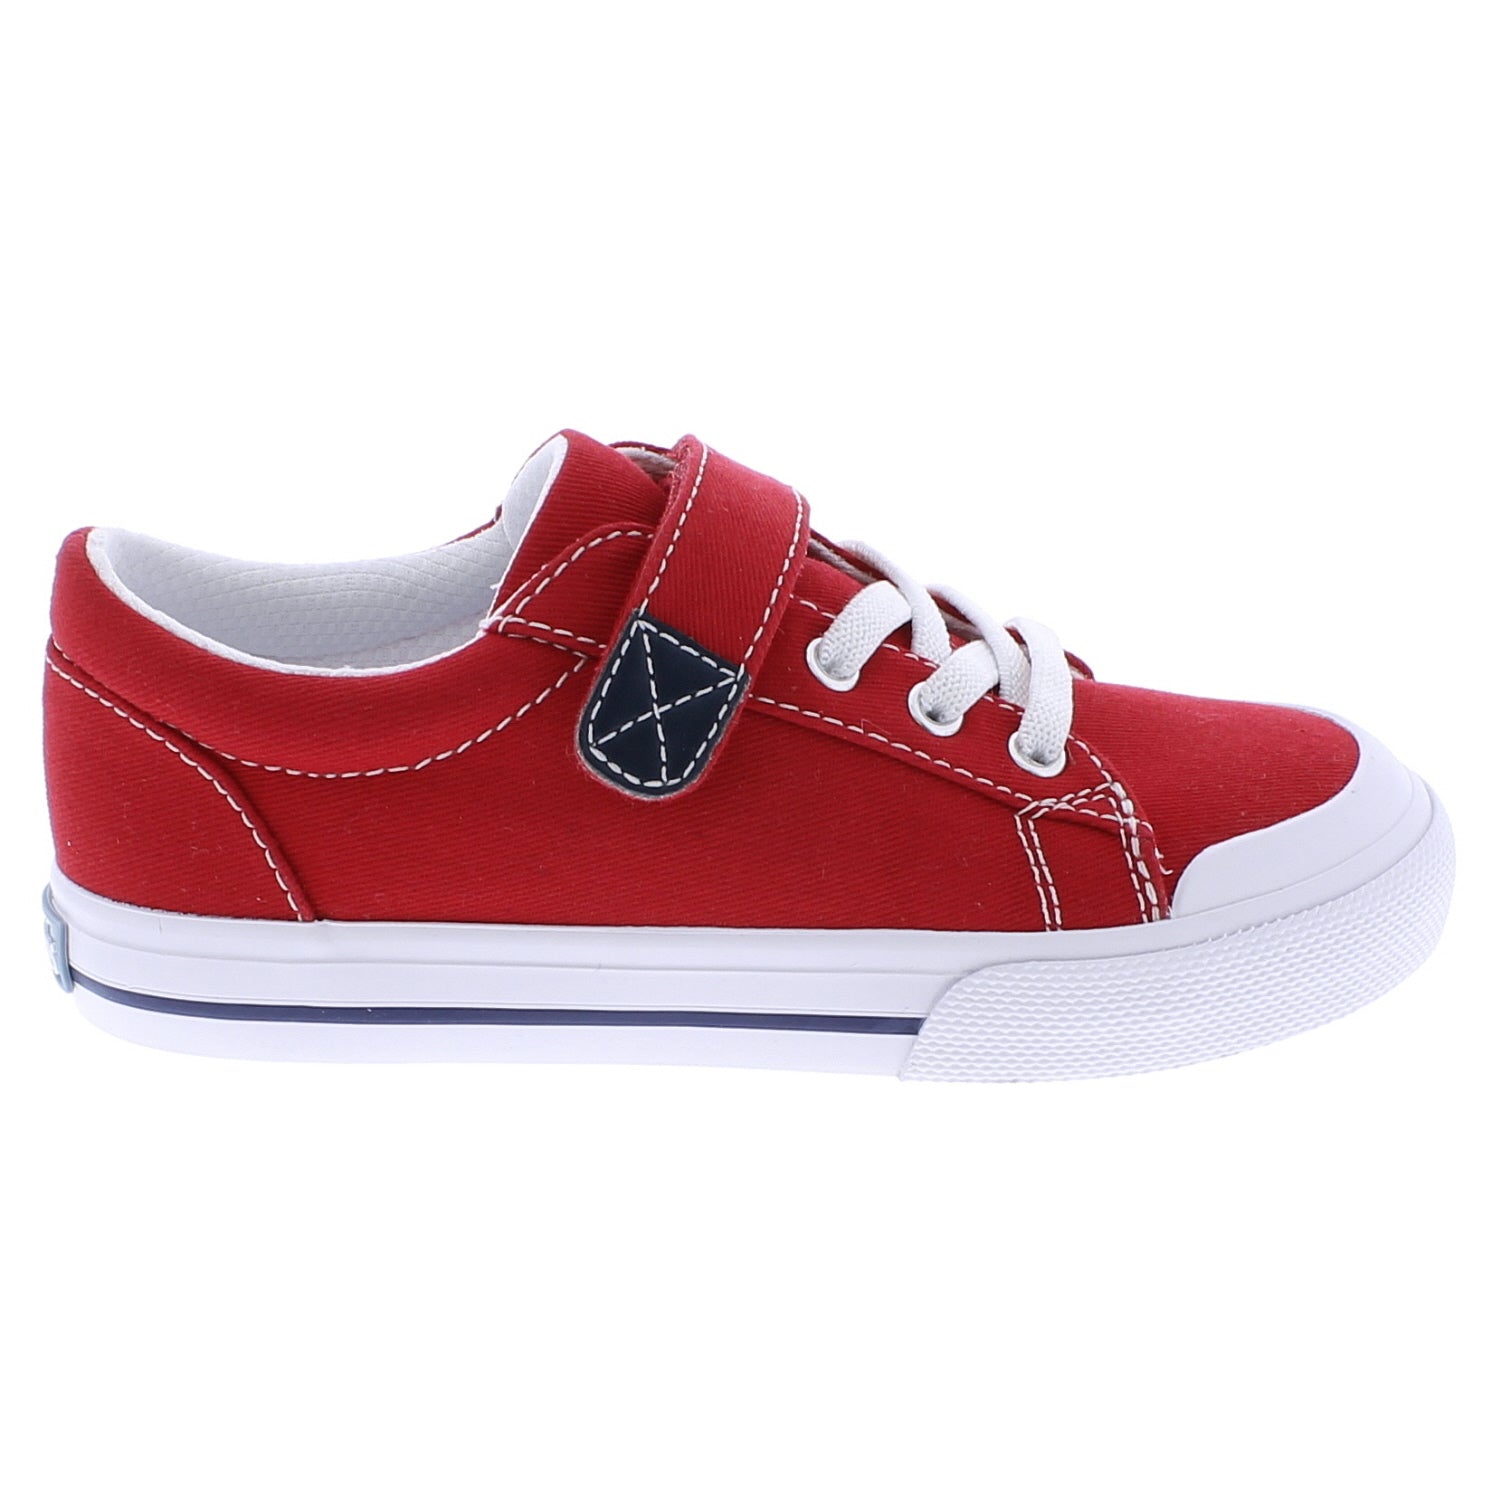 Jordan - Red Shoes Footmates   